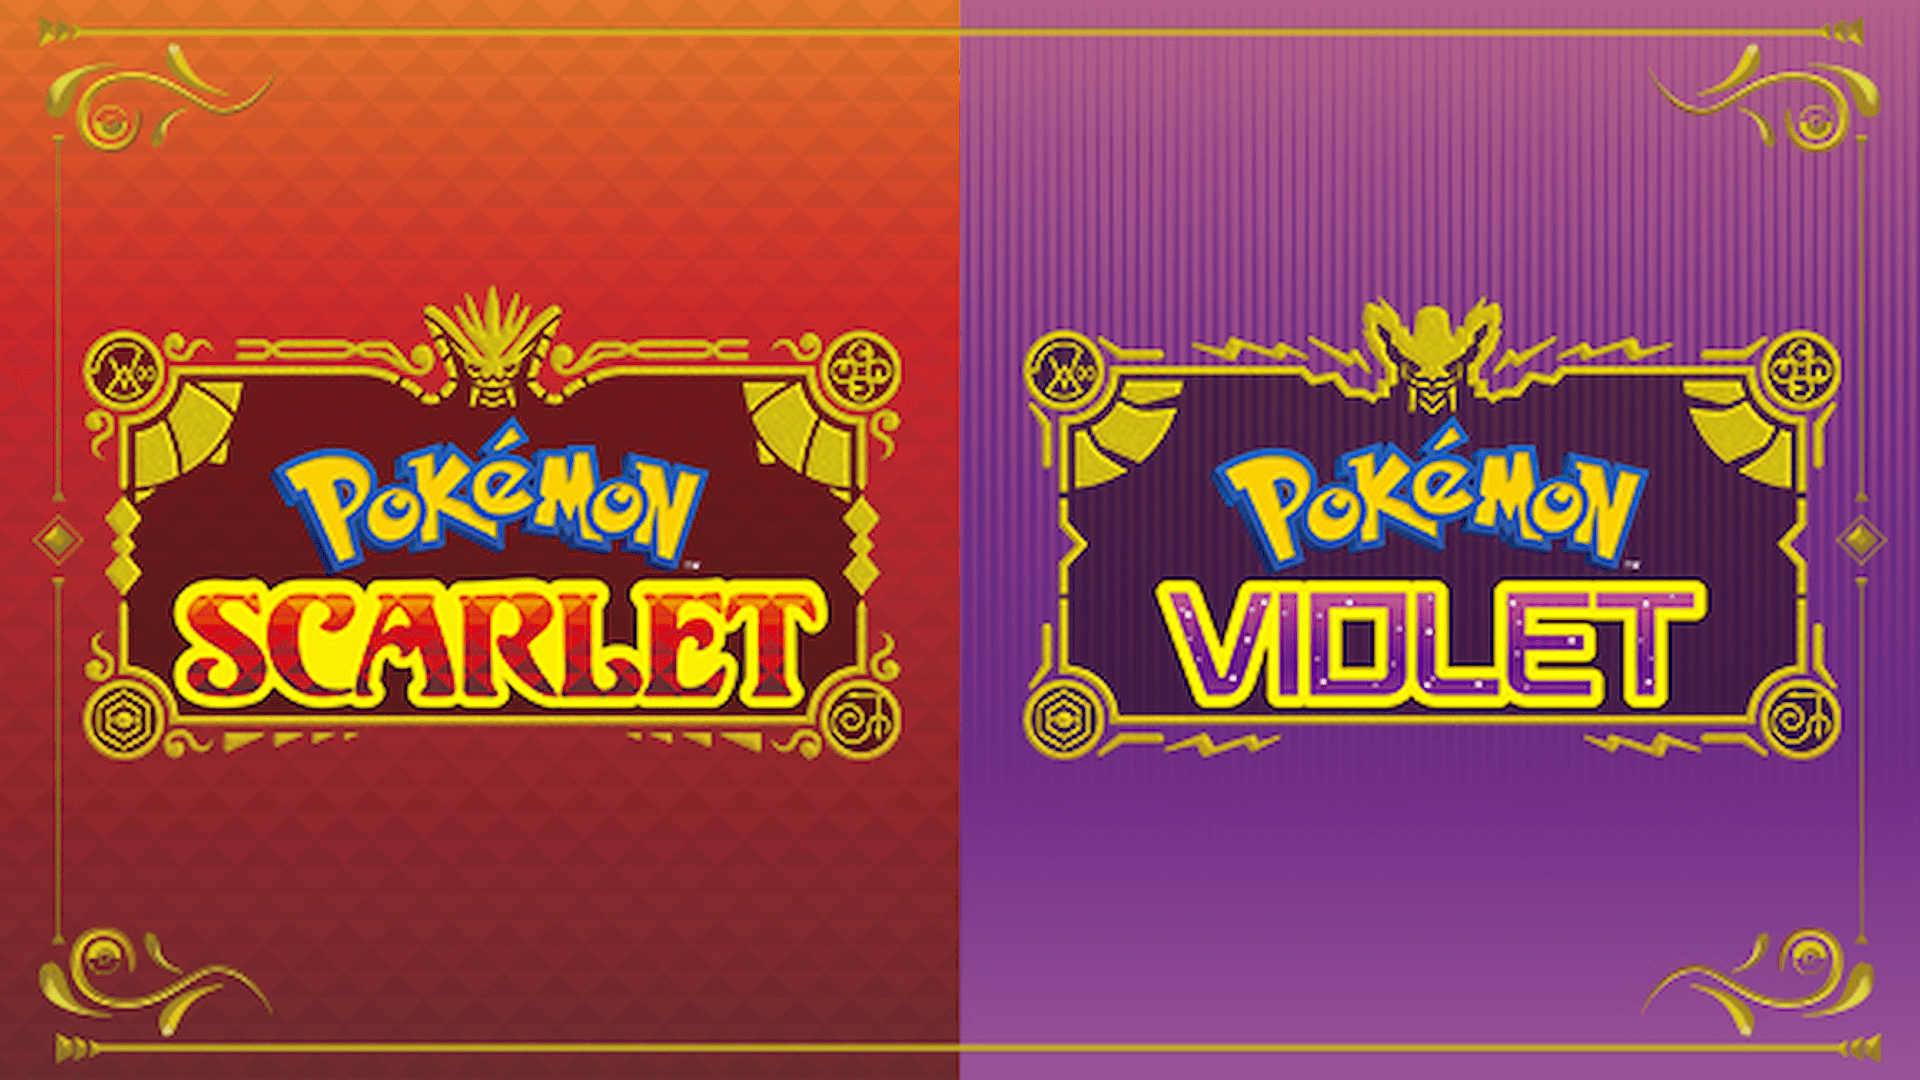 Pokémon Scarlet and Violet Leak Confirms Over 100 New Pokémon